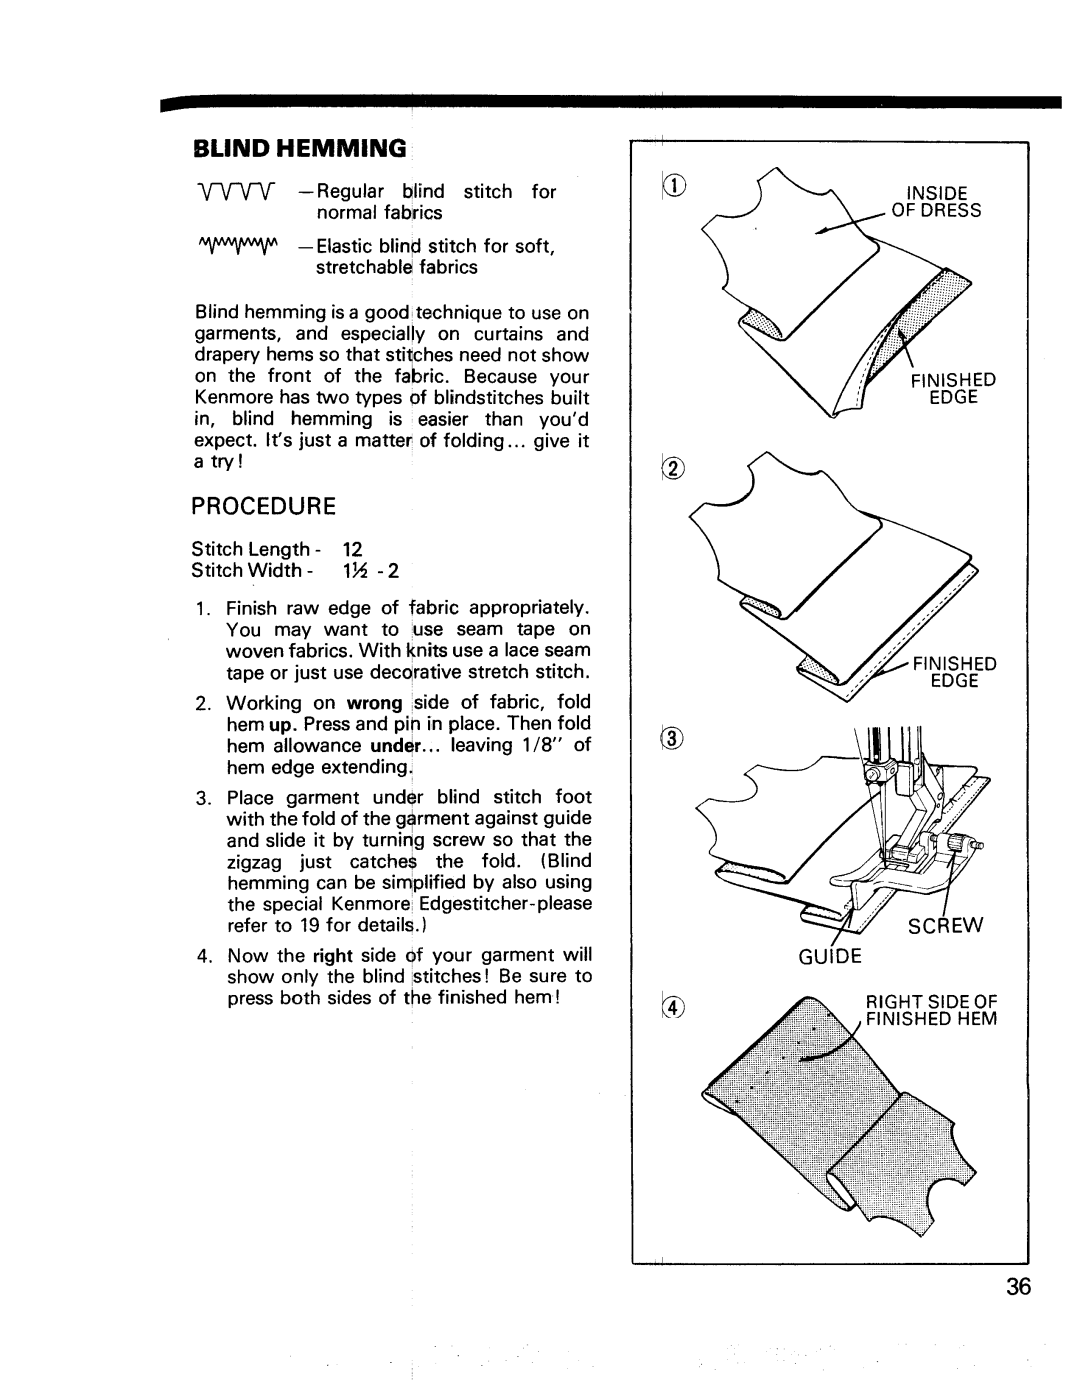 Kenmore 17922, 17920 manual Blind Hemming, Procedure 